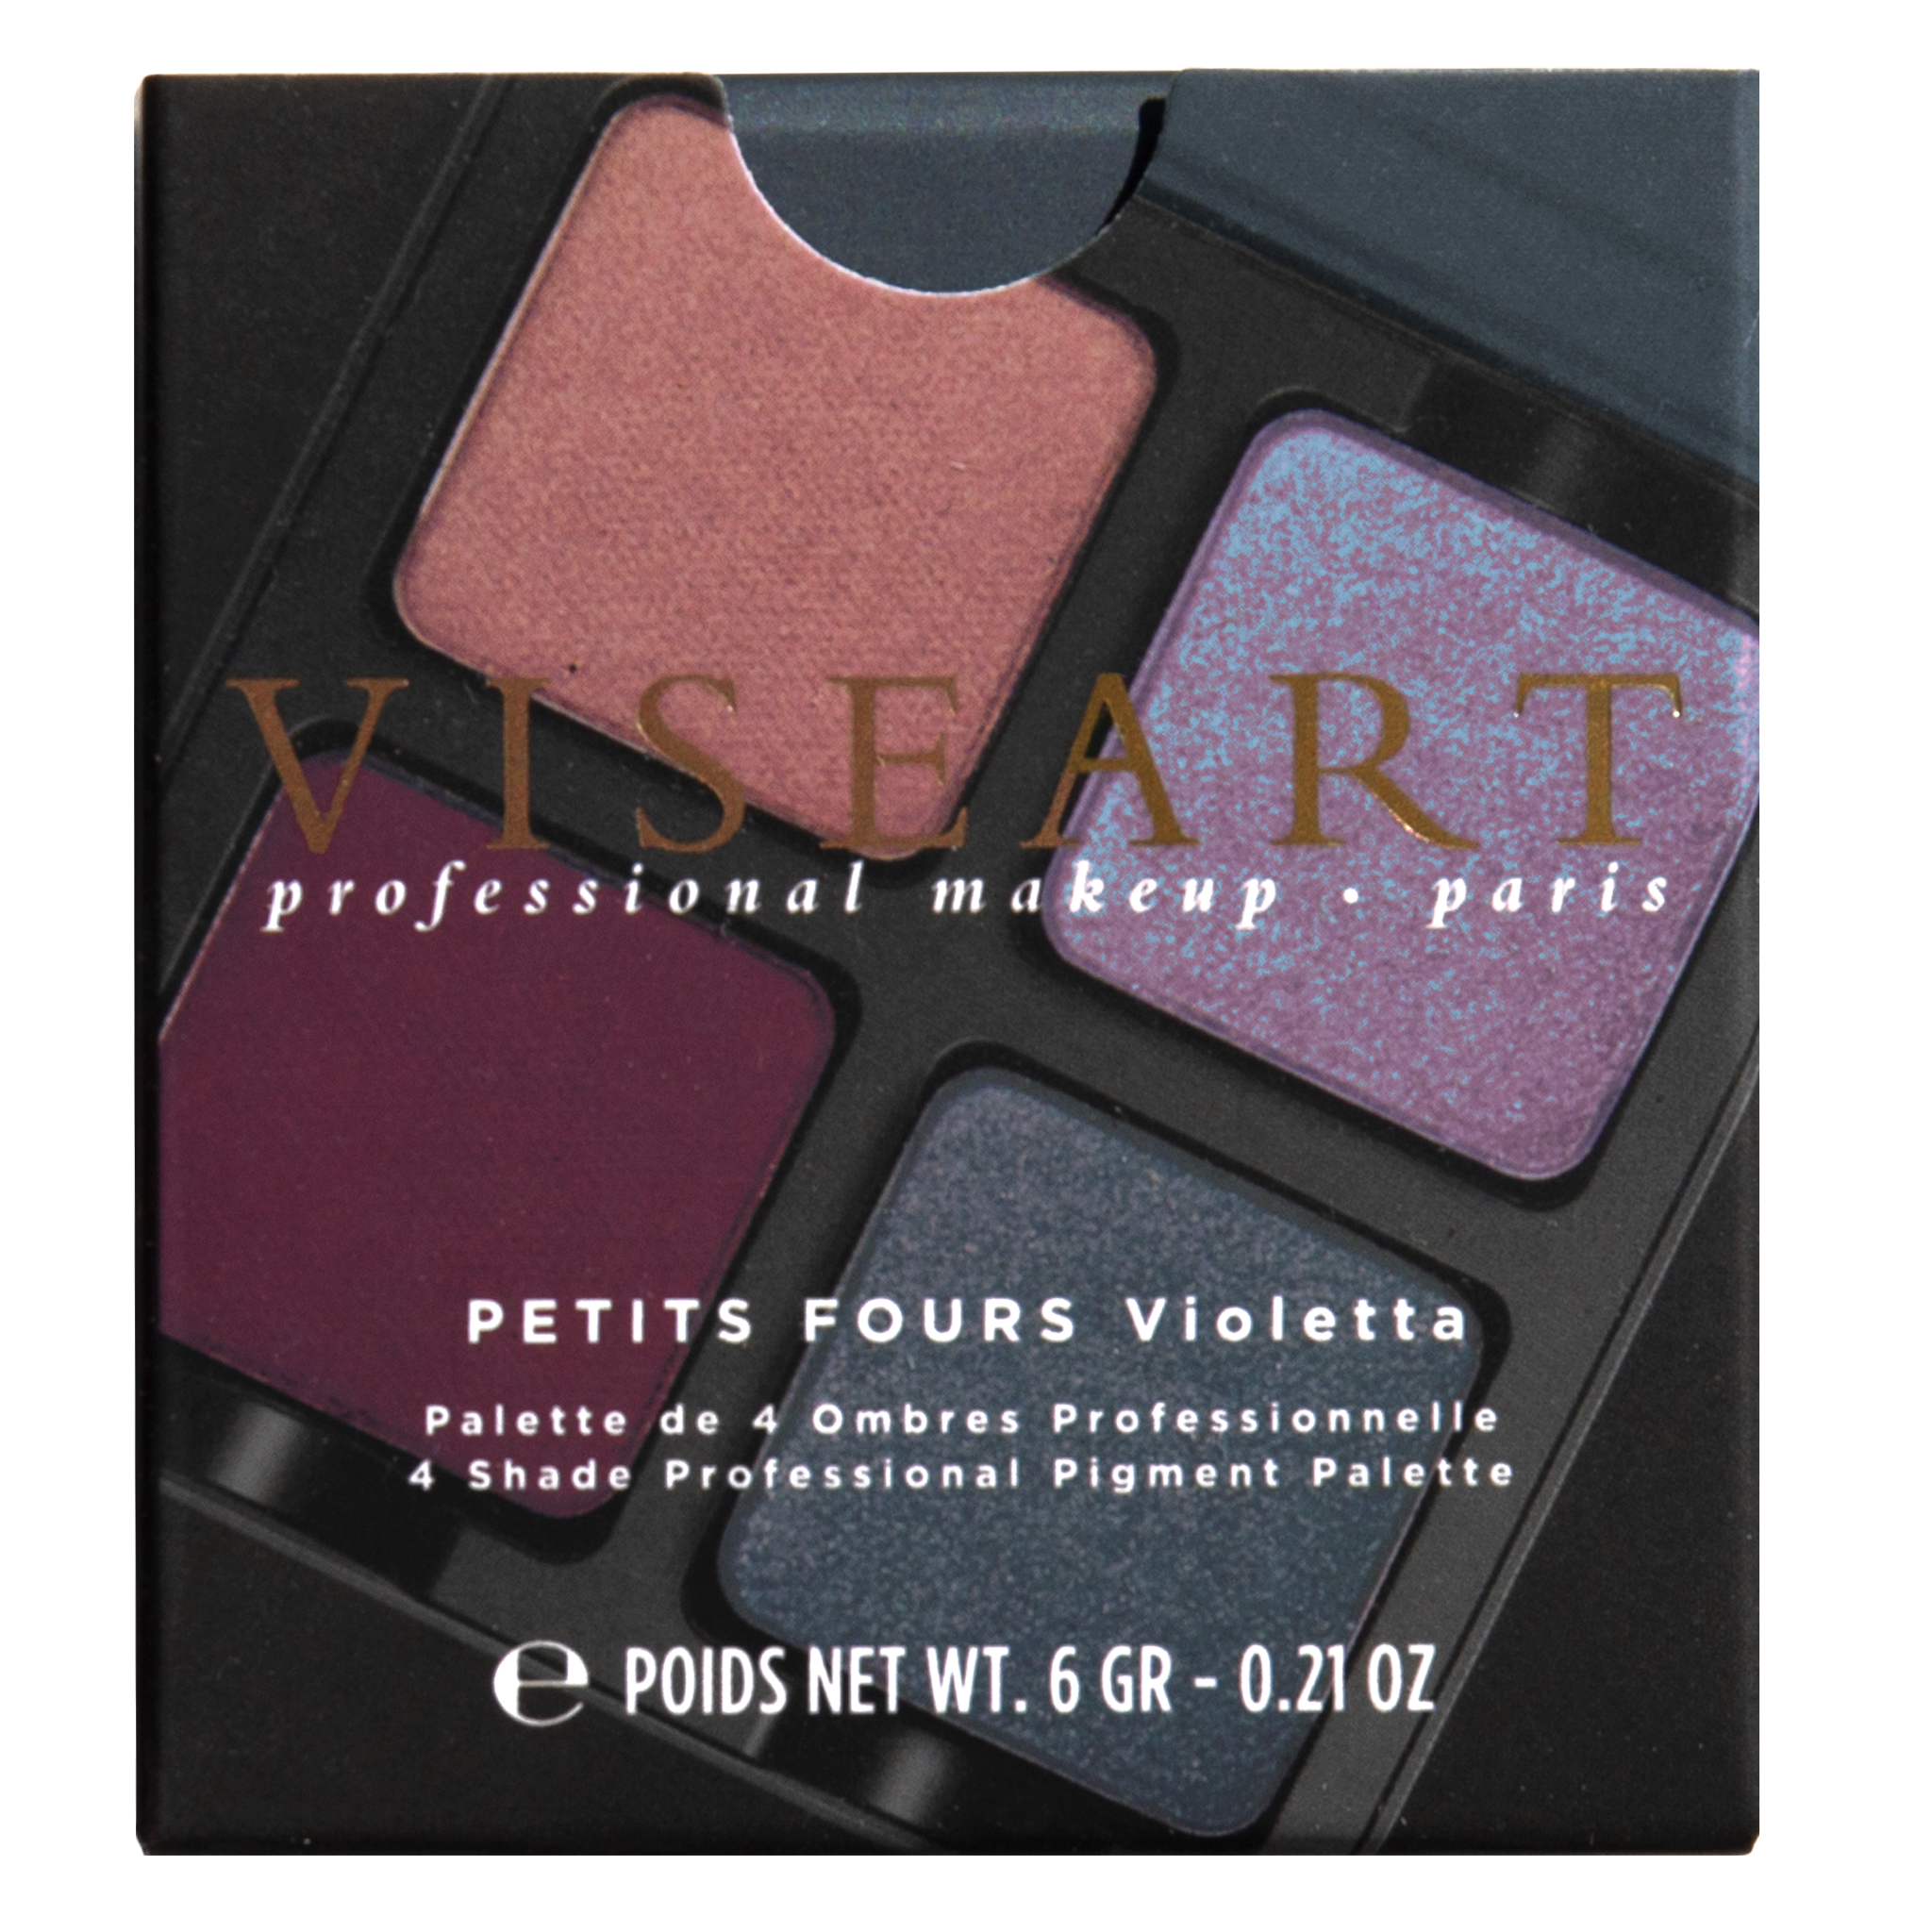 Viseart Paris Petits Fours Violetta Eyeshadow Palette Carton